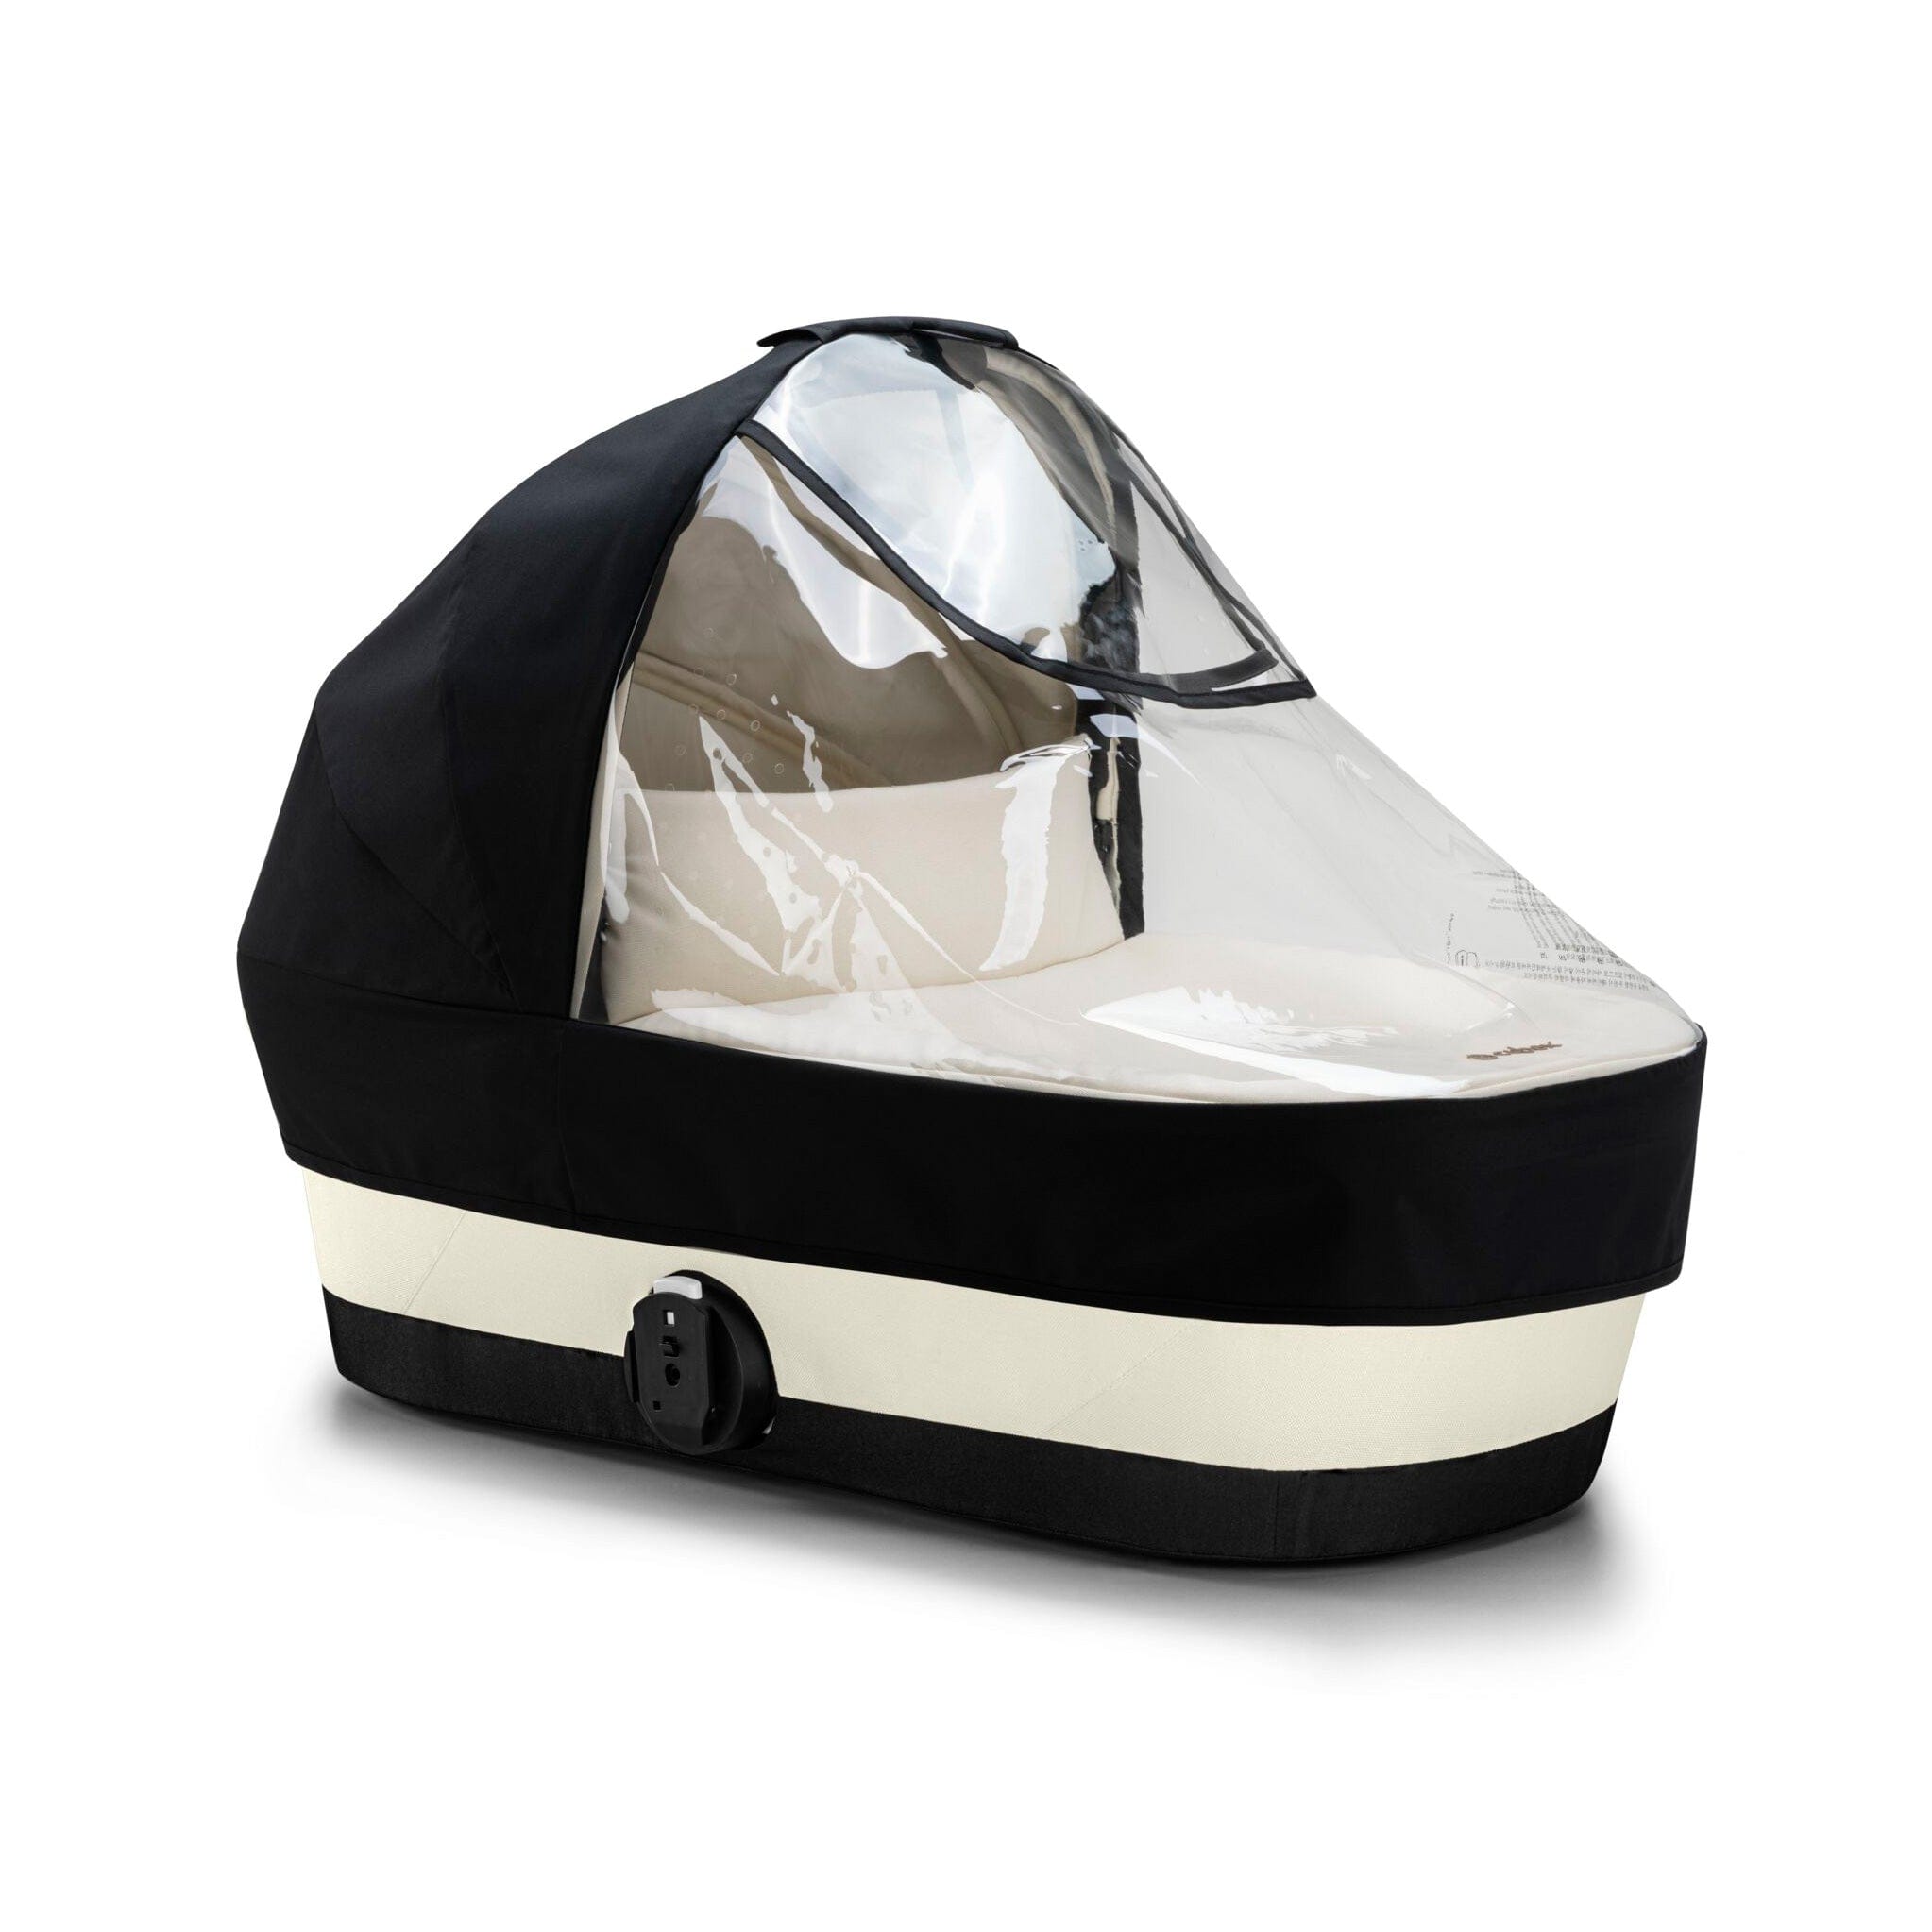 Cybex Gazelle S Comfort Bundle in Taupe/Seashell Beige Baby Prams 12771-TPE-SEA-BEI 4063846324903